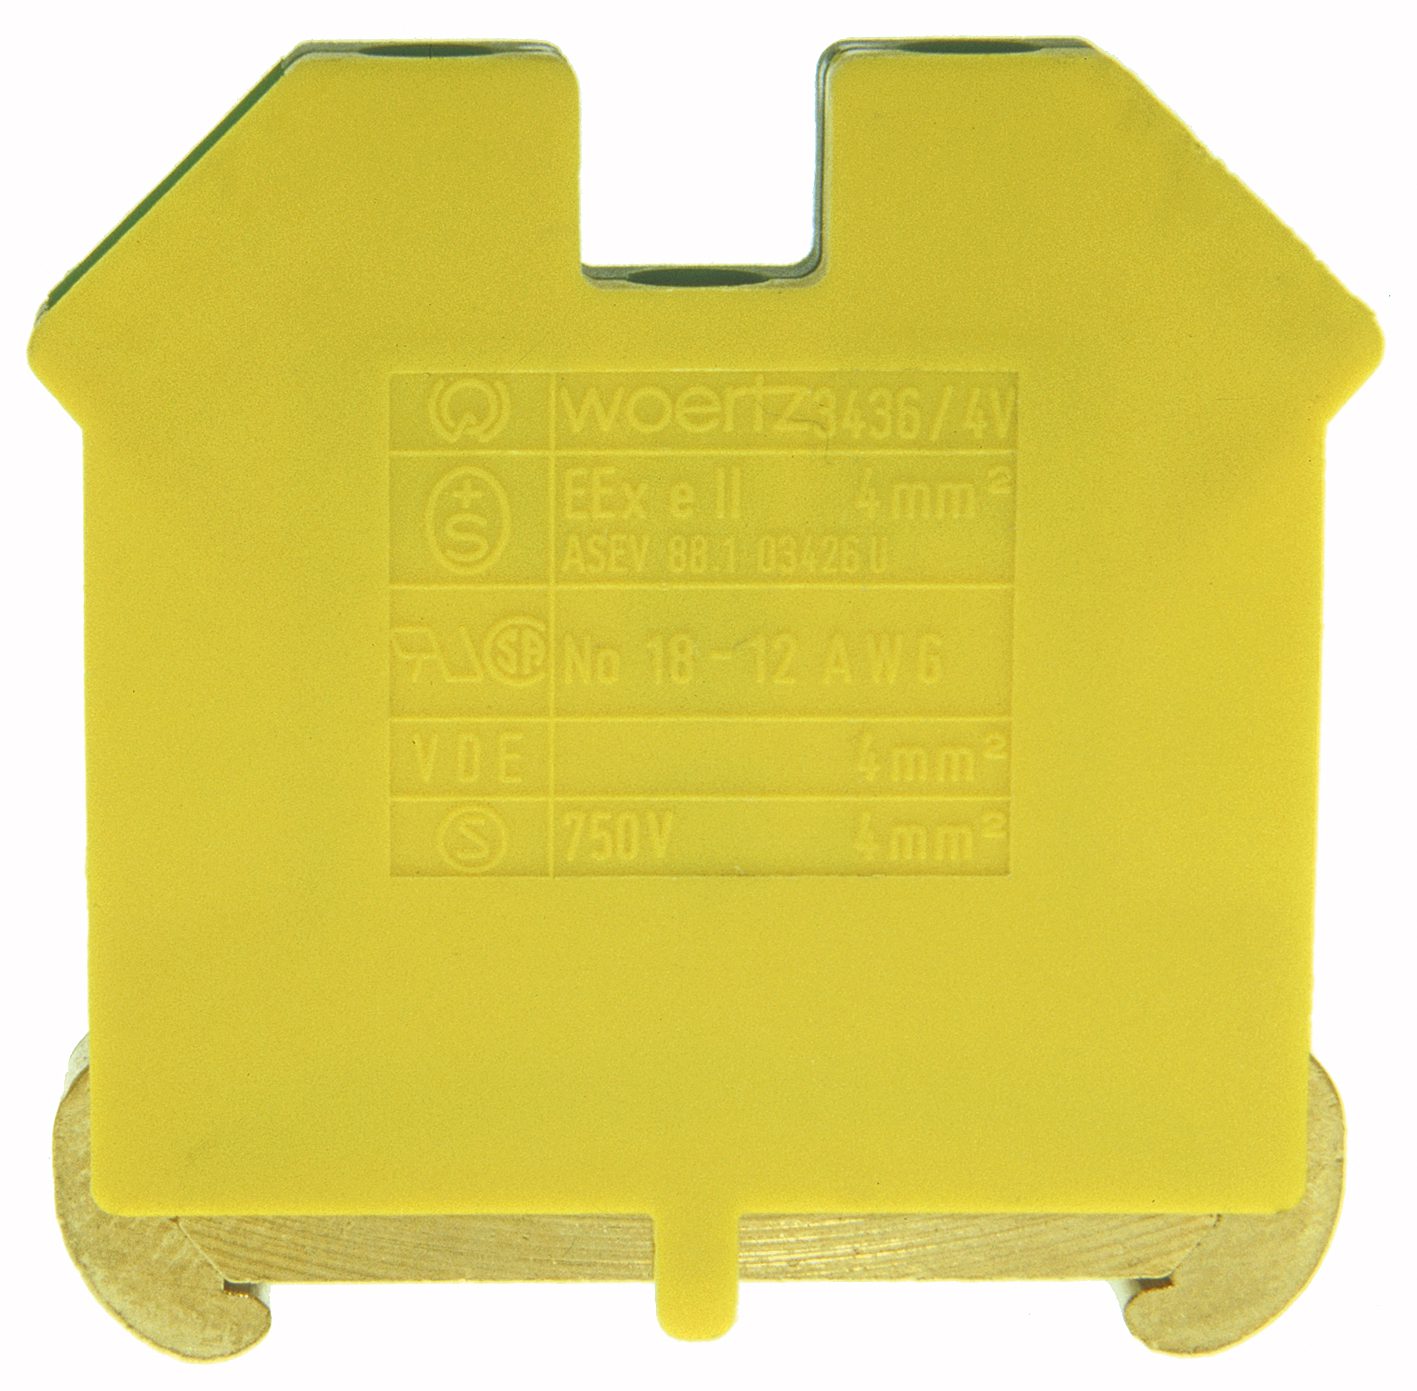 Geleiderklem DIN35 4mm² groen/geel